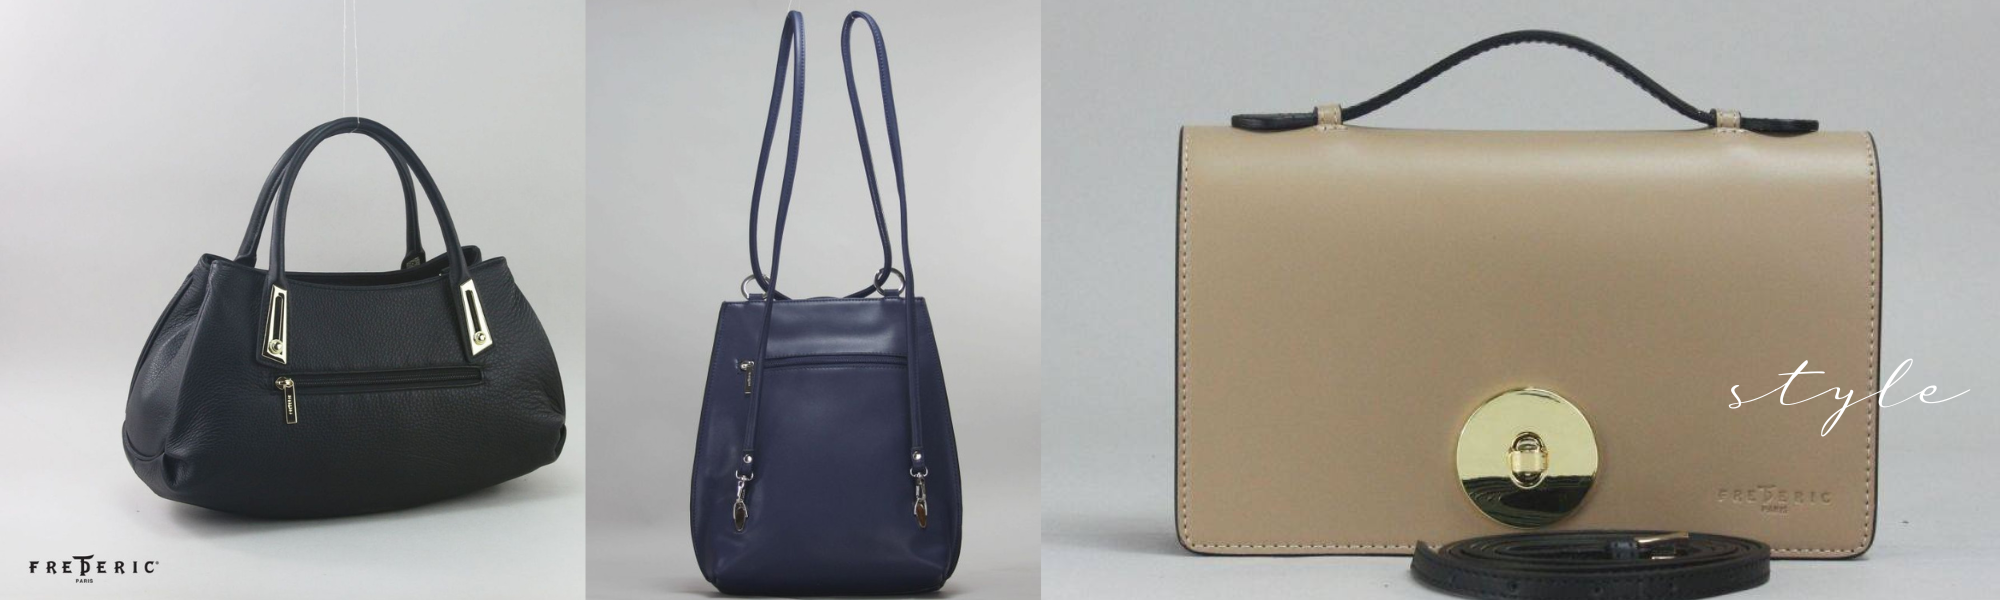 designer handbags collage 